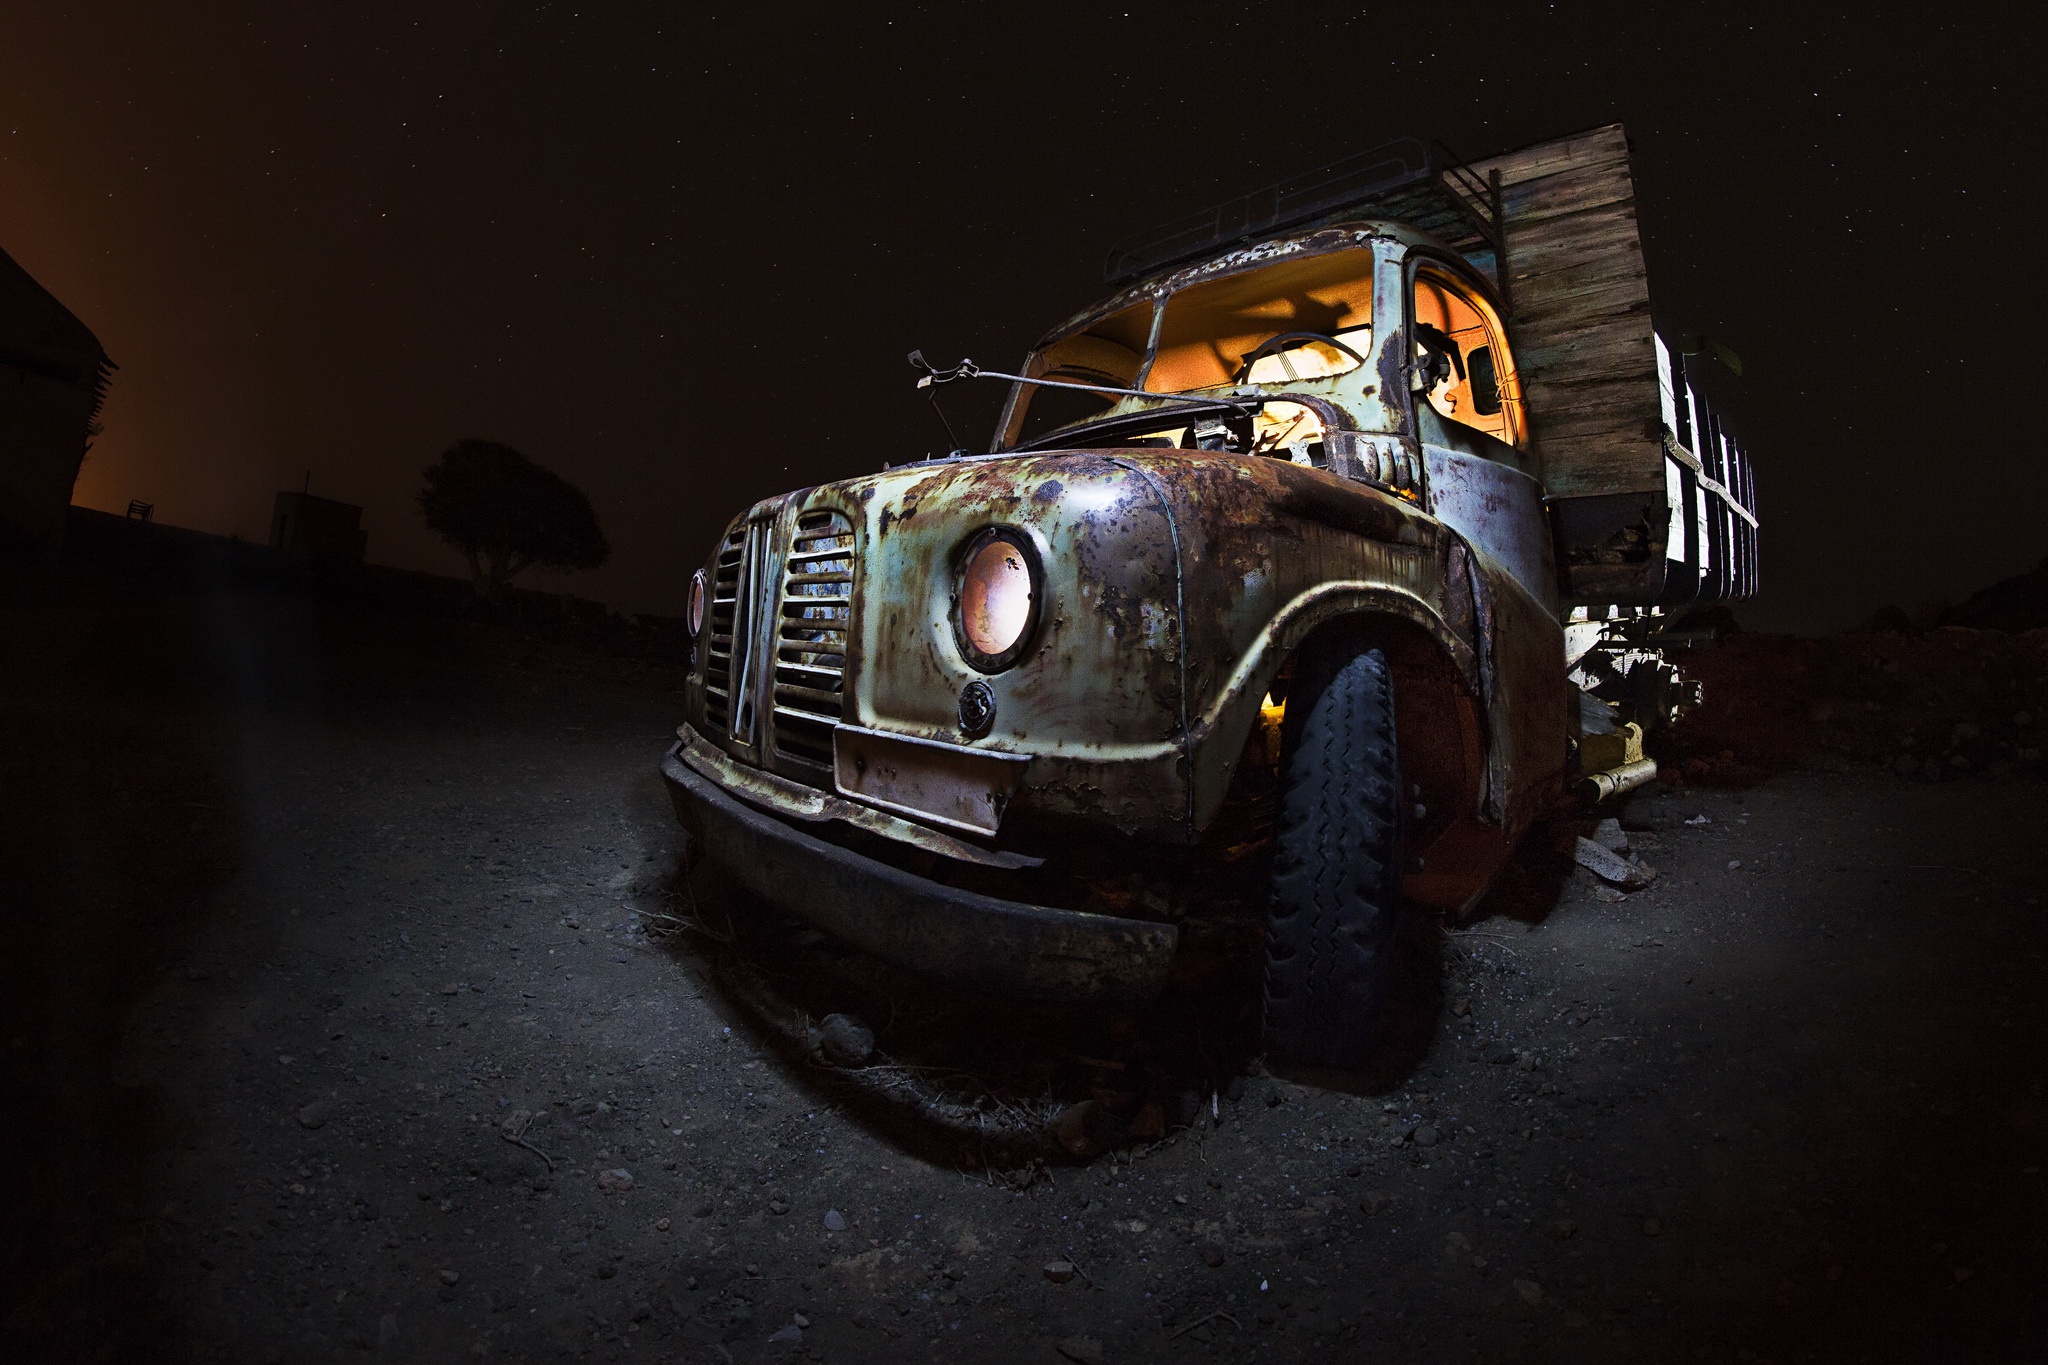 General 2048x1365 dark car night vehicle truck wreck rust old old car